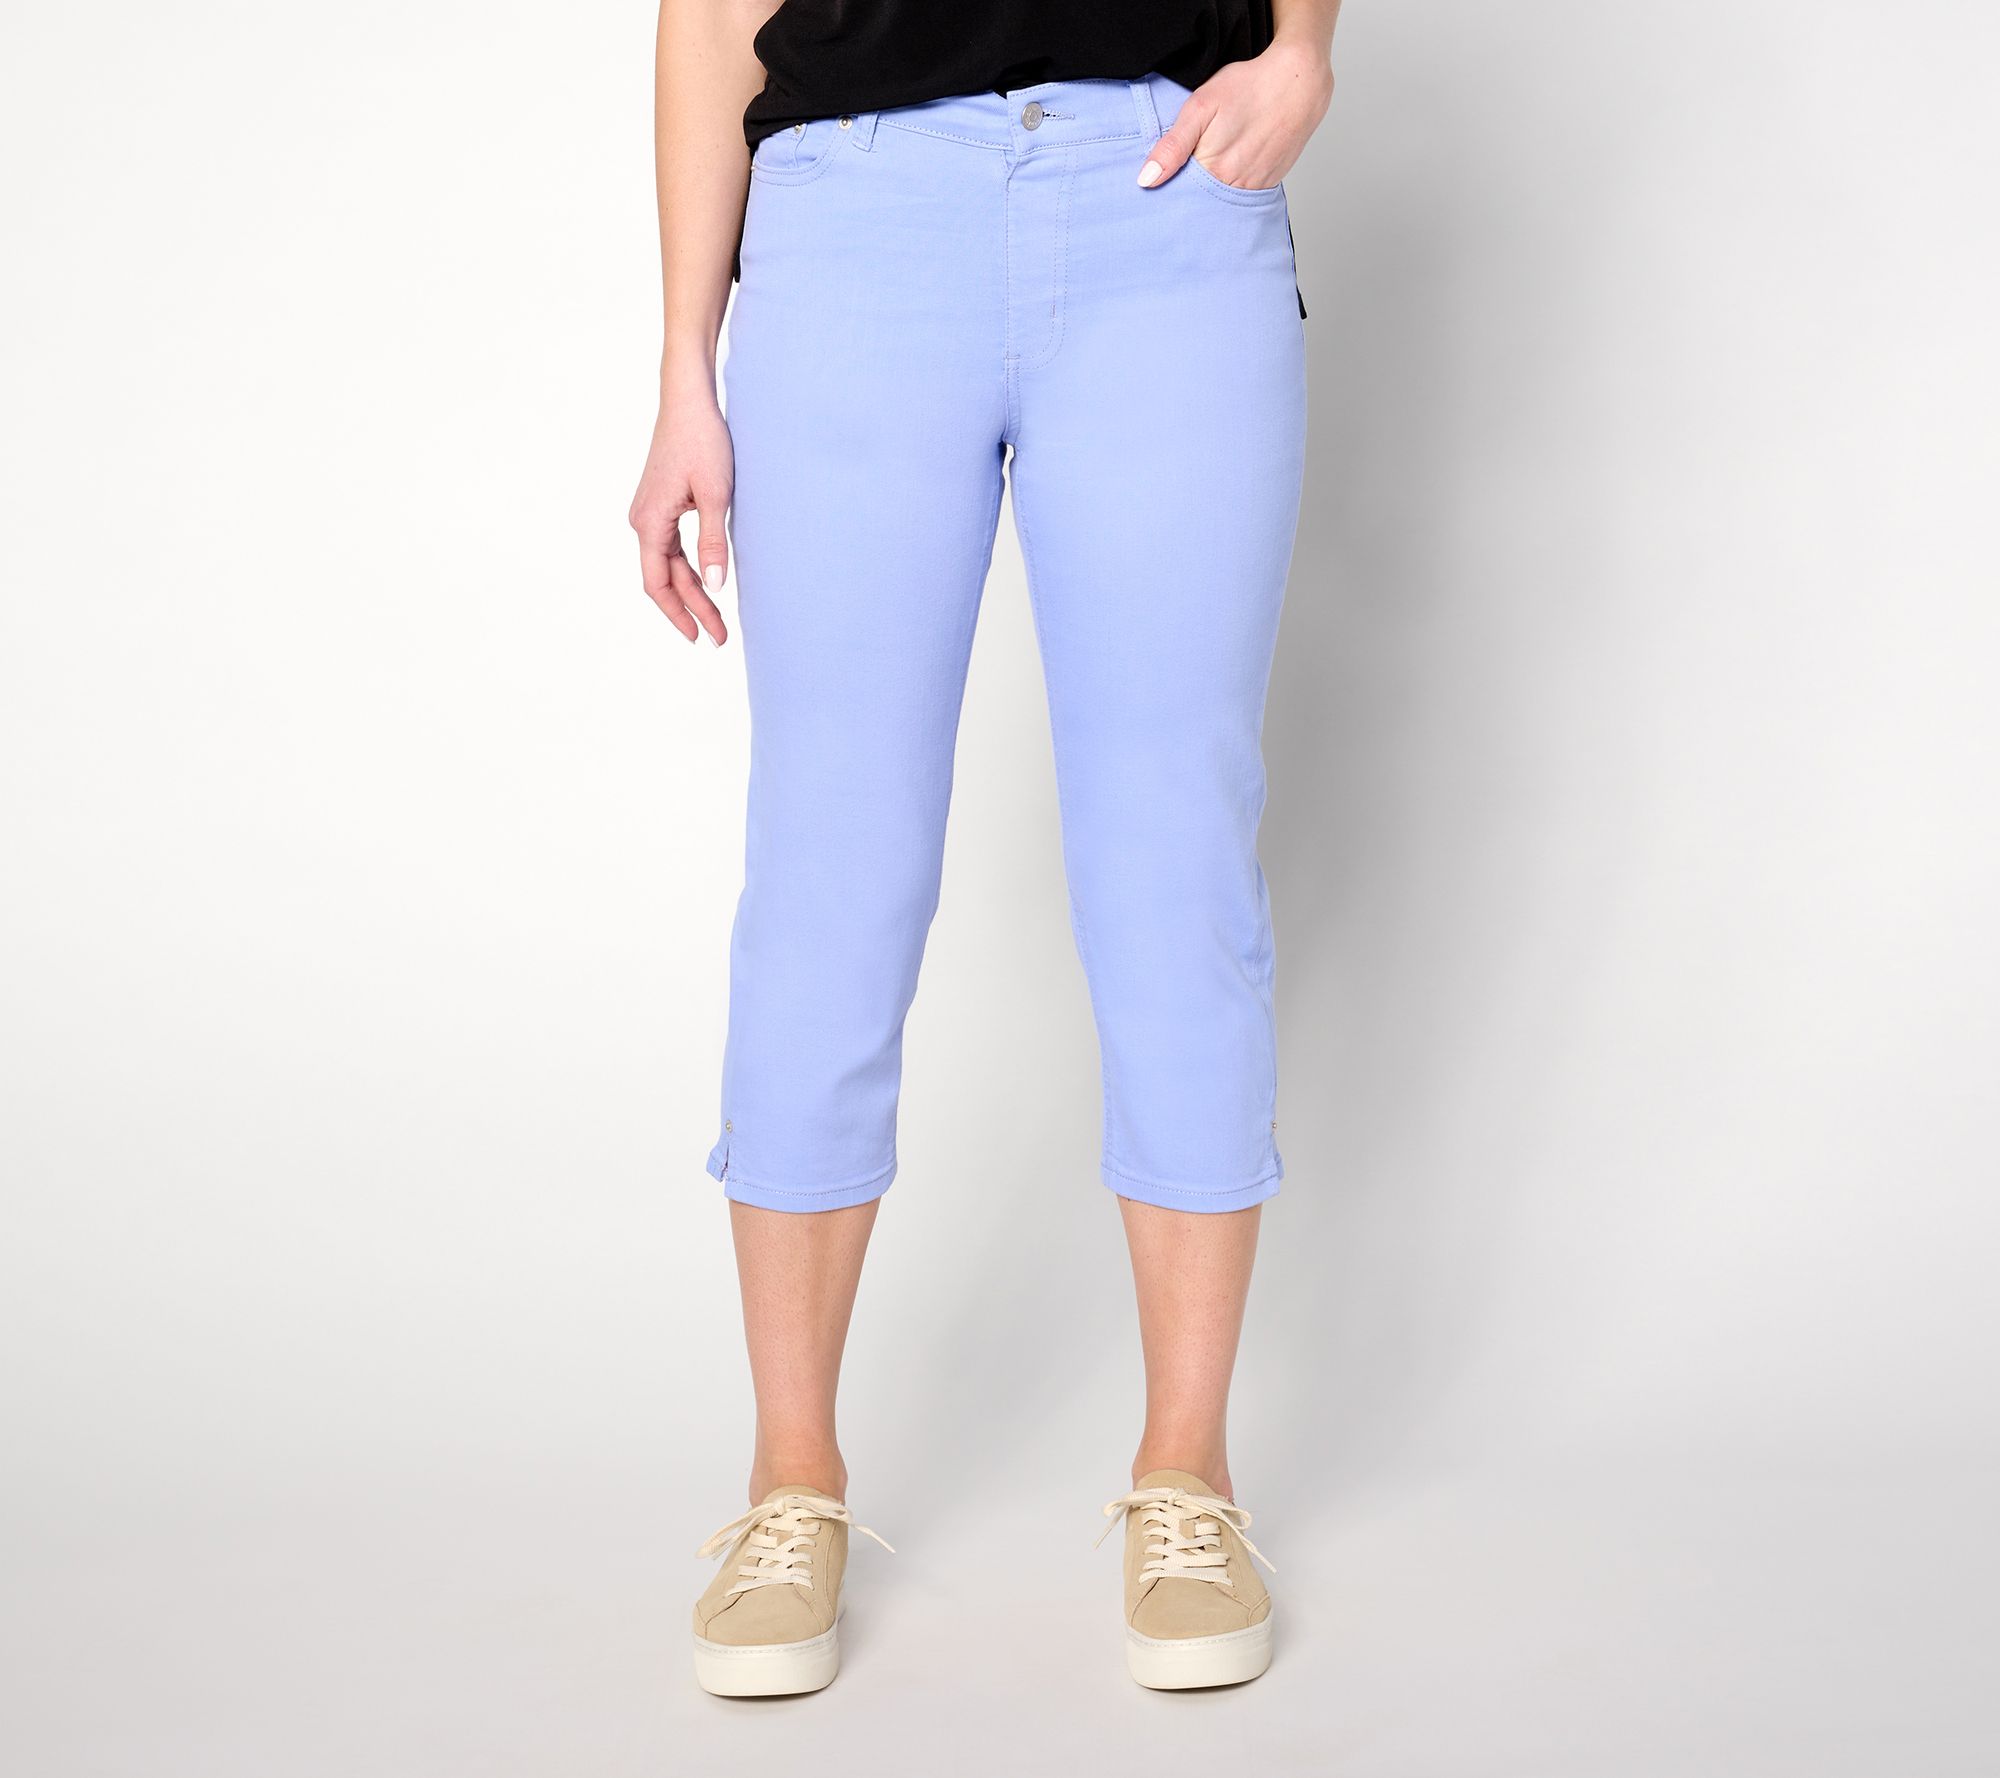 Blue Cast Denim Womens Capri Jeans Size 6 Curvy Fit Embellished